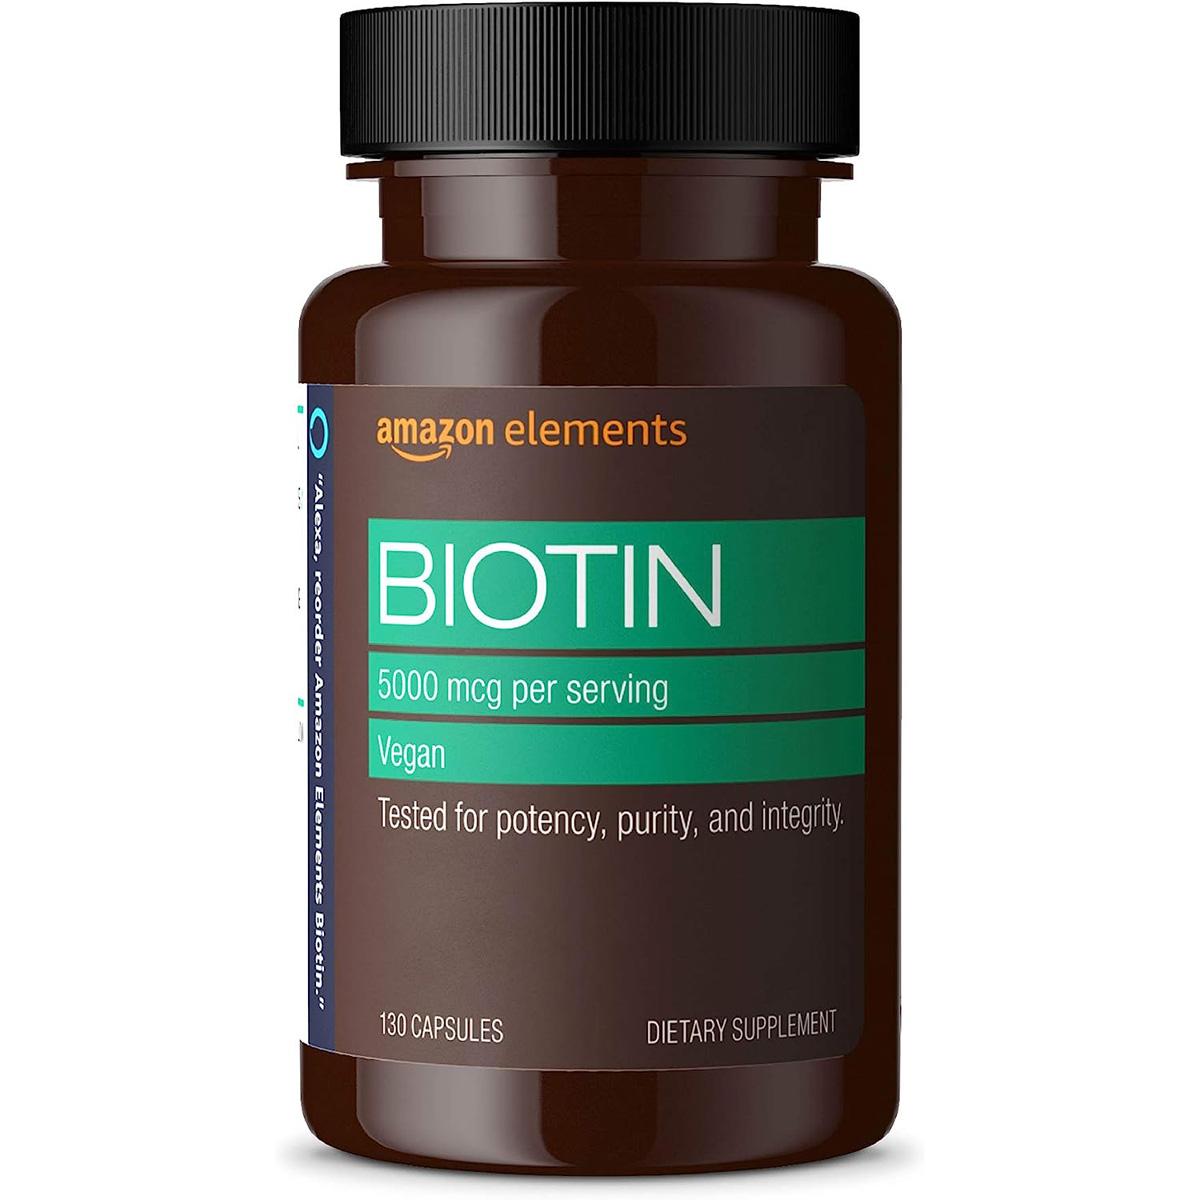 Amazon Elements Vegan Biotin 130 Capsules for $3.63 Shipped